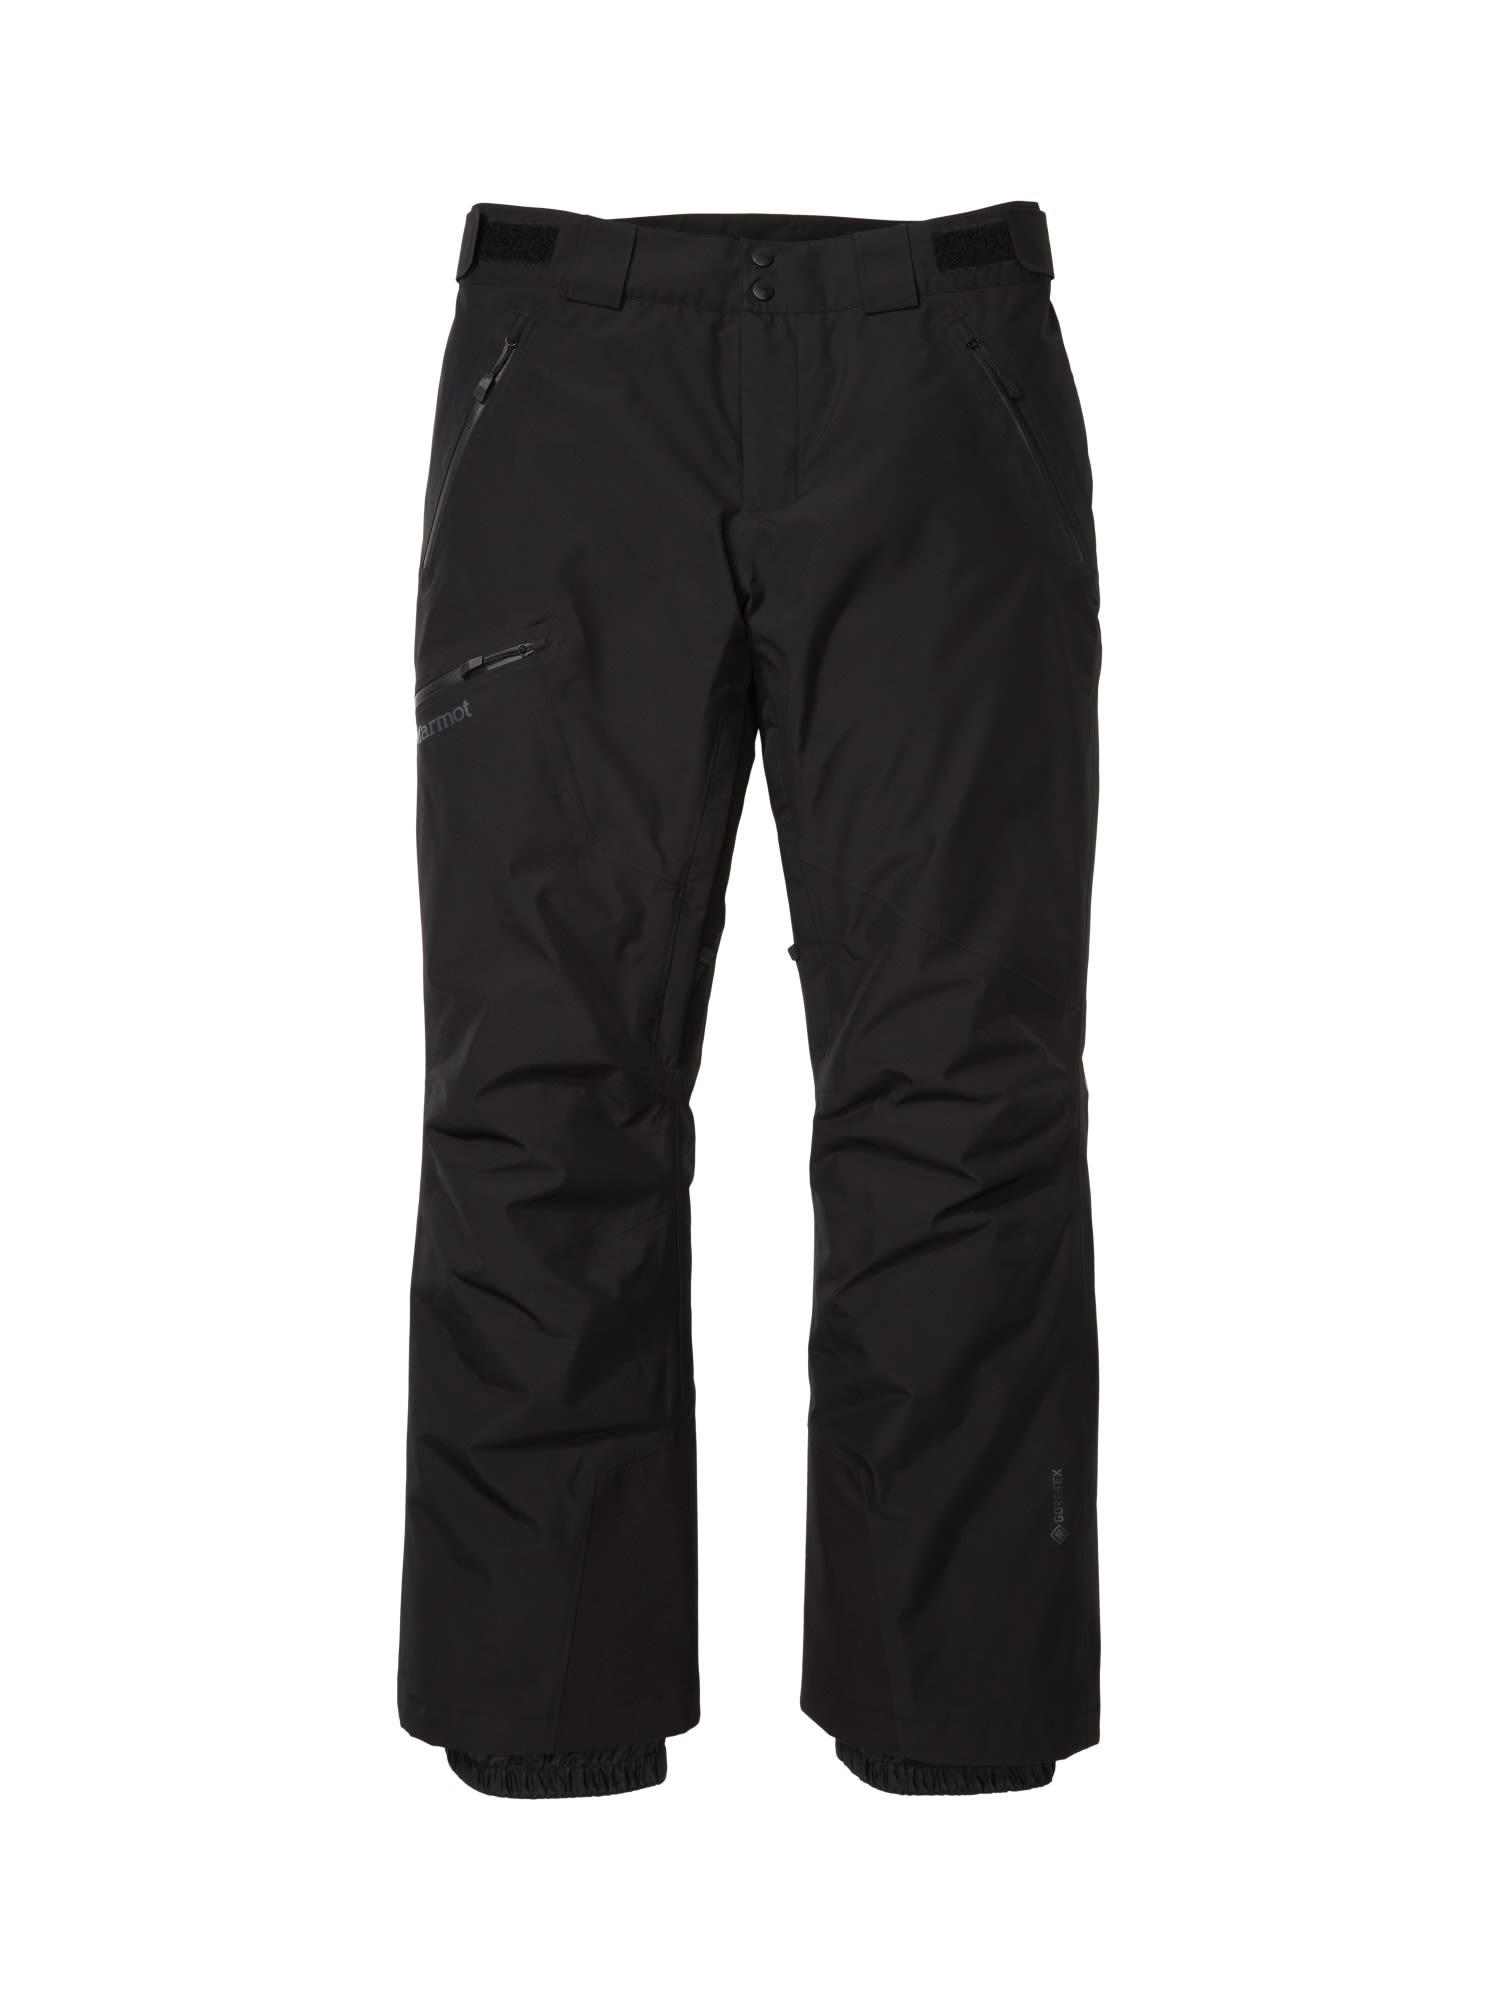 Marmot Lightray Pant Schwarz- Male Gore-Tex(R) Lange Hosen- Grsse S - Farbe Black